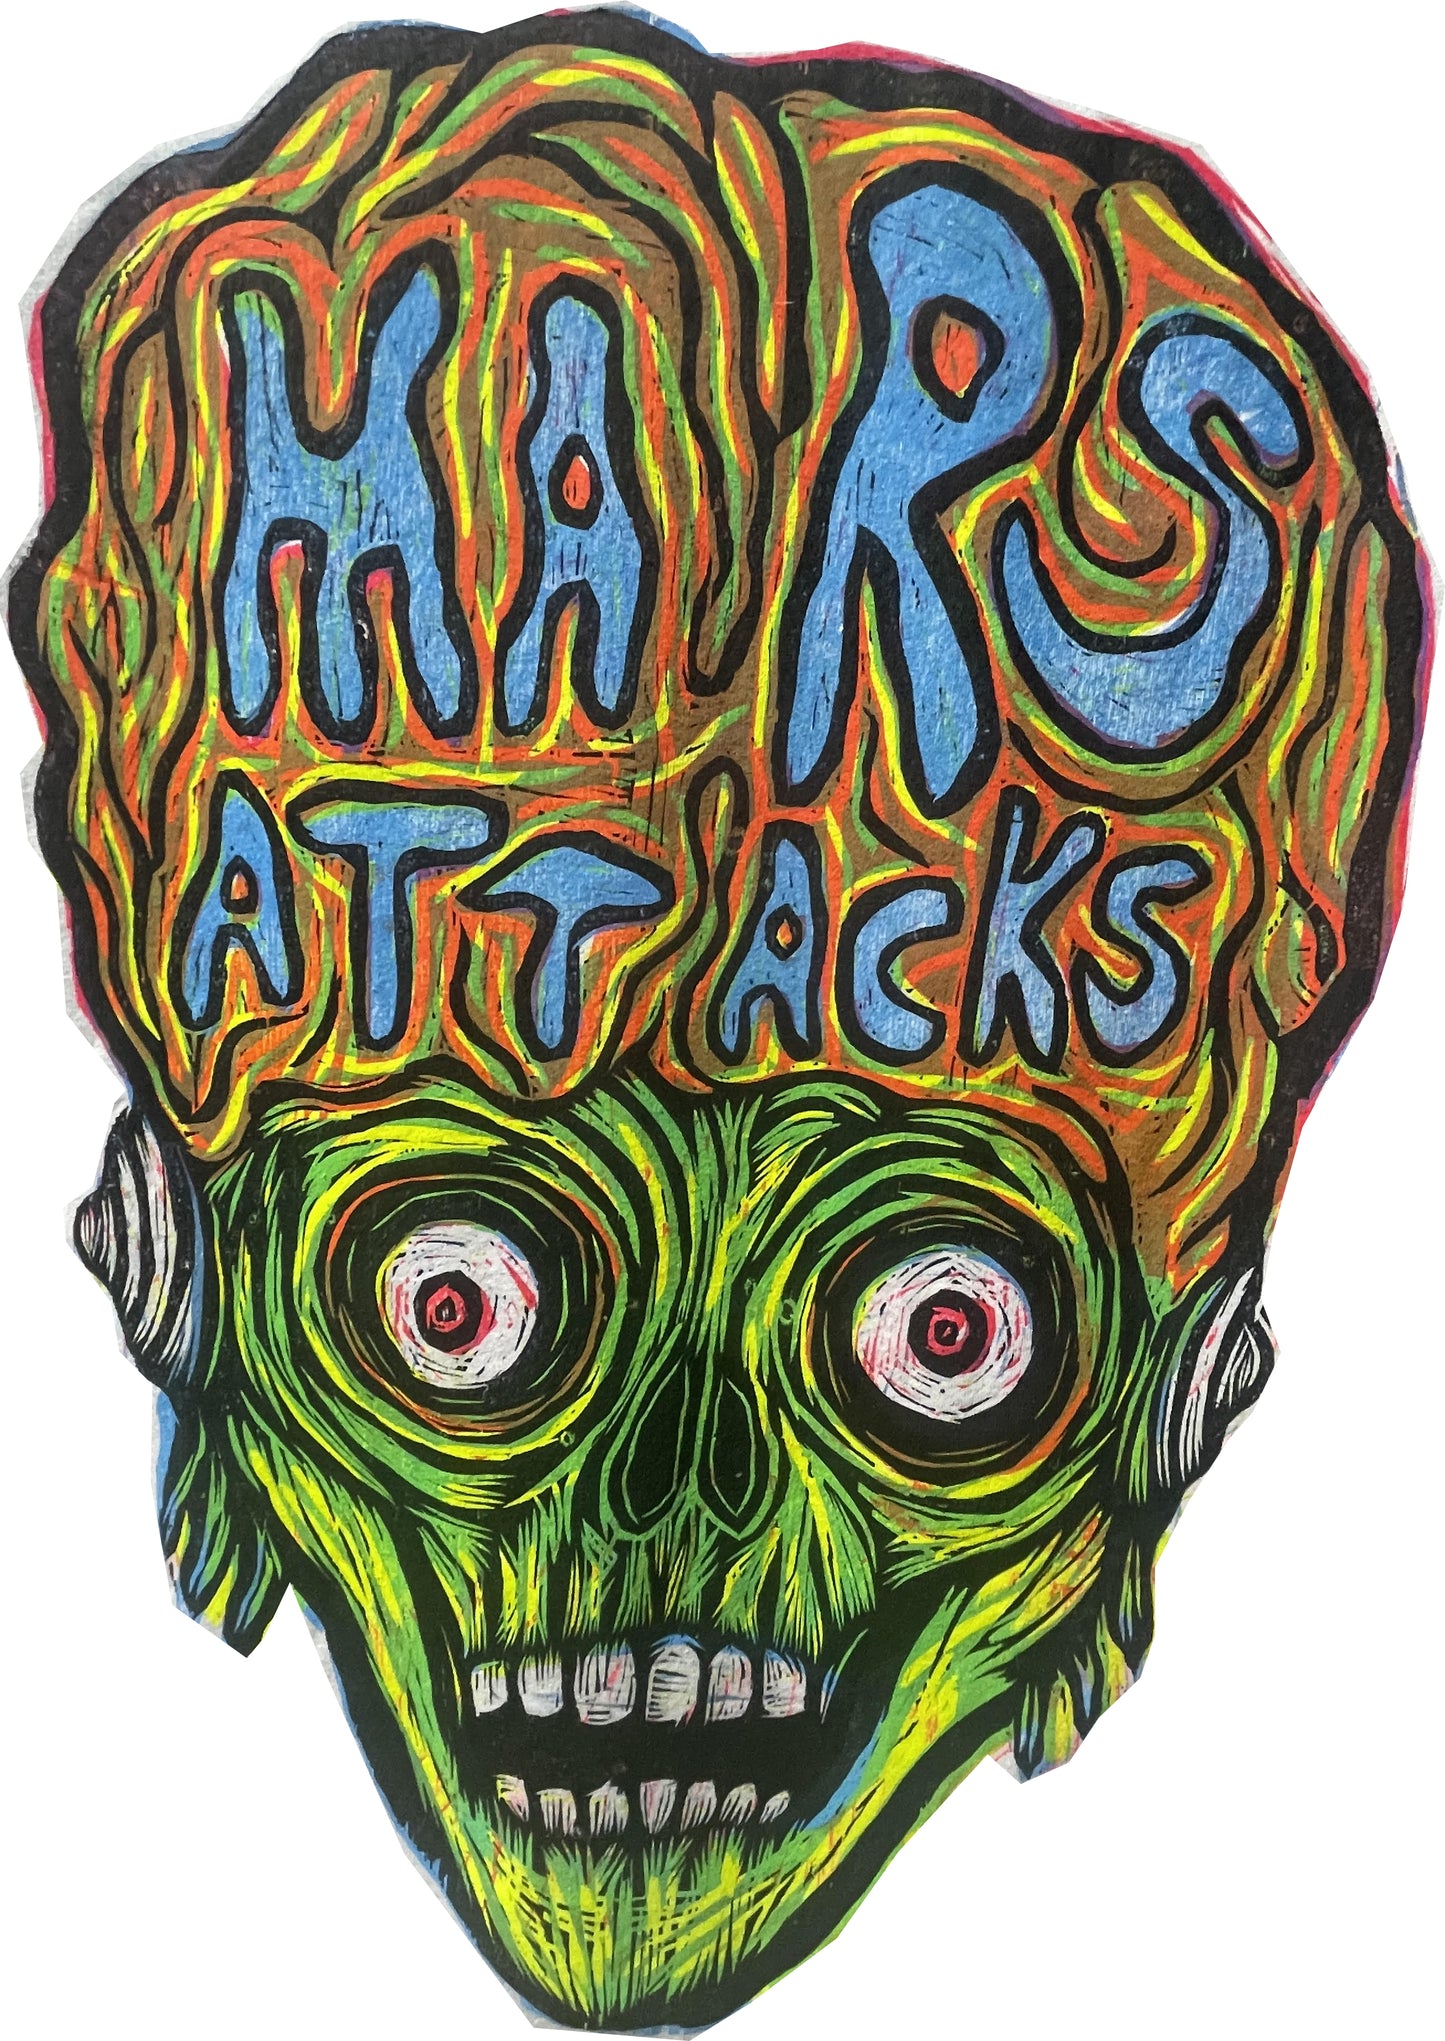 Space Dust Mars Attacks (Big Head) Woodcut Handprinted Color T-Shirt